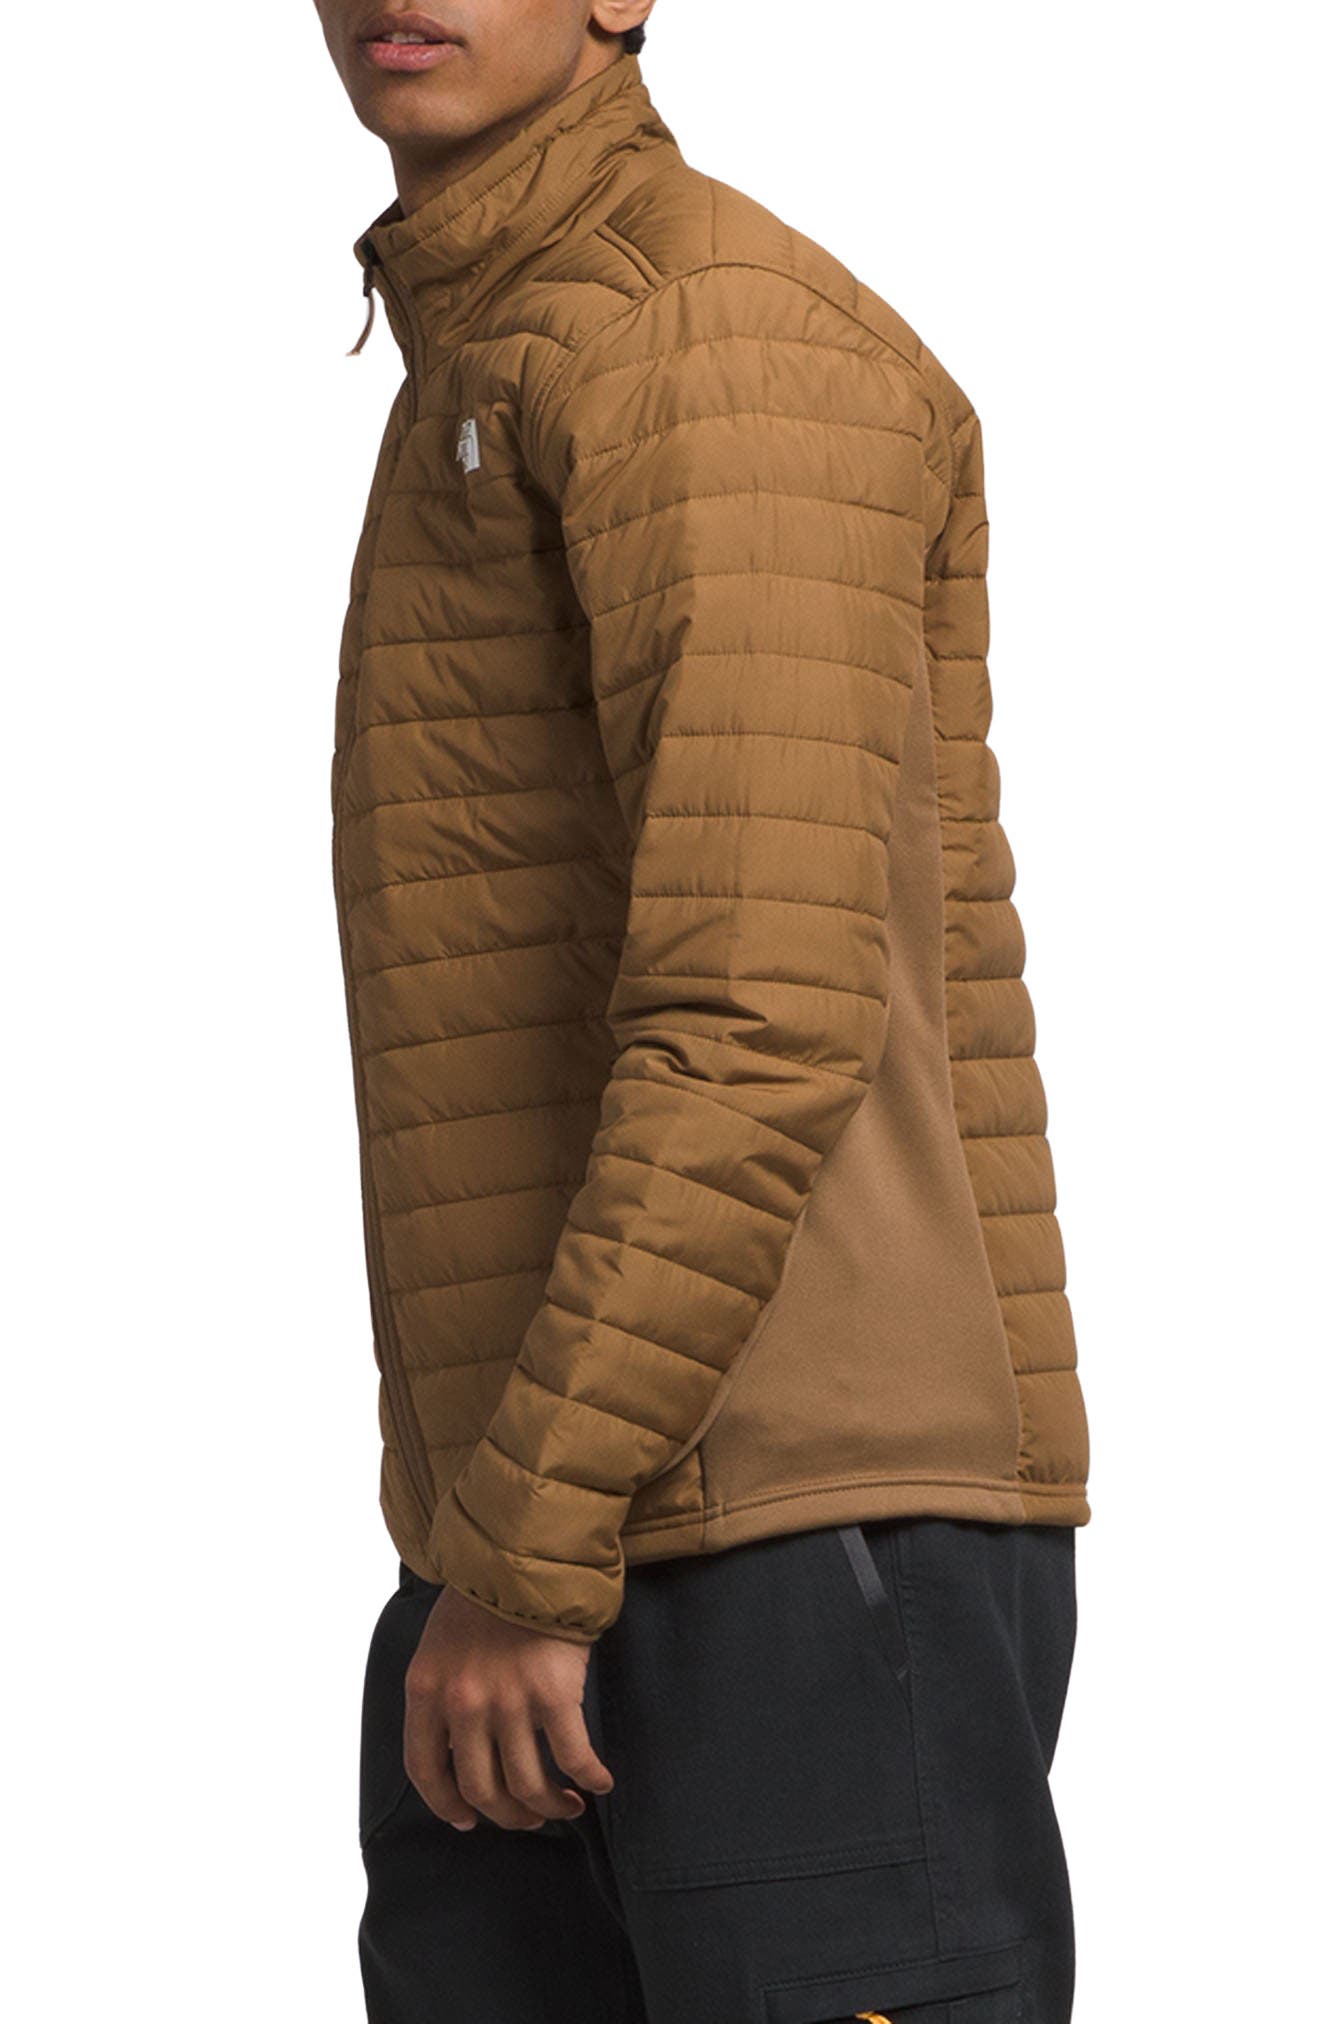 The North Face Canyonlands Hybrid Jacket